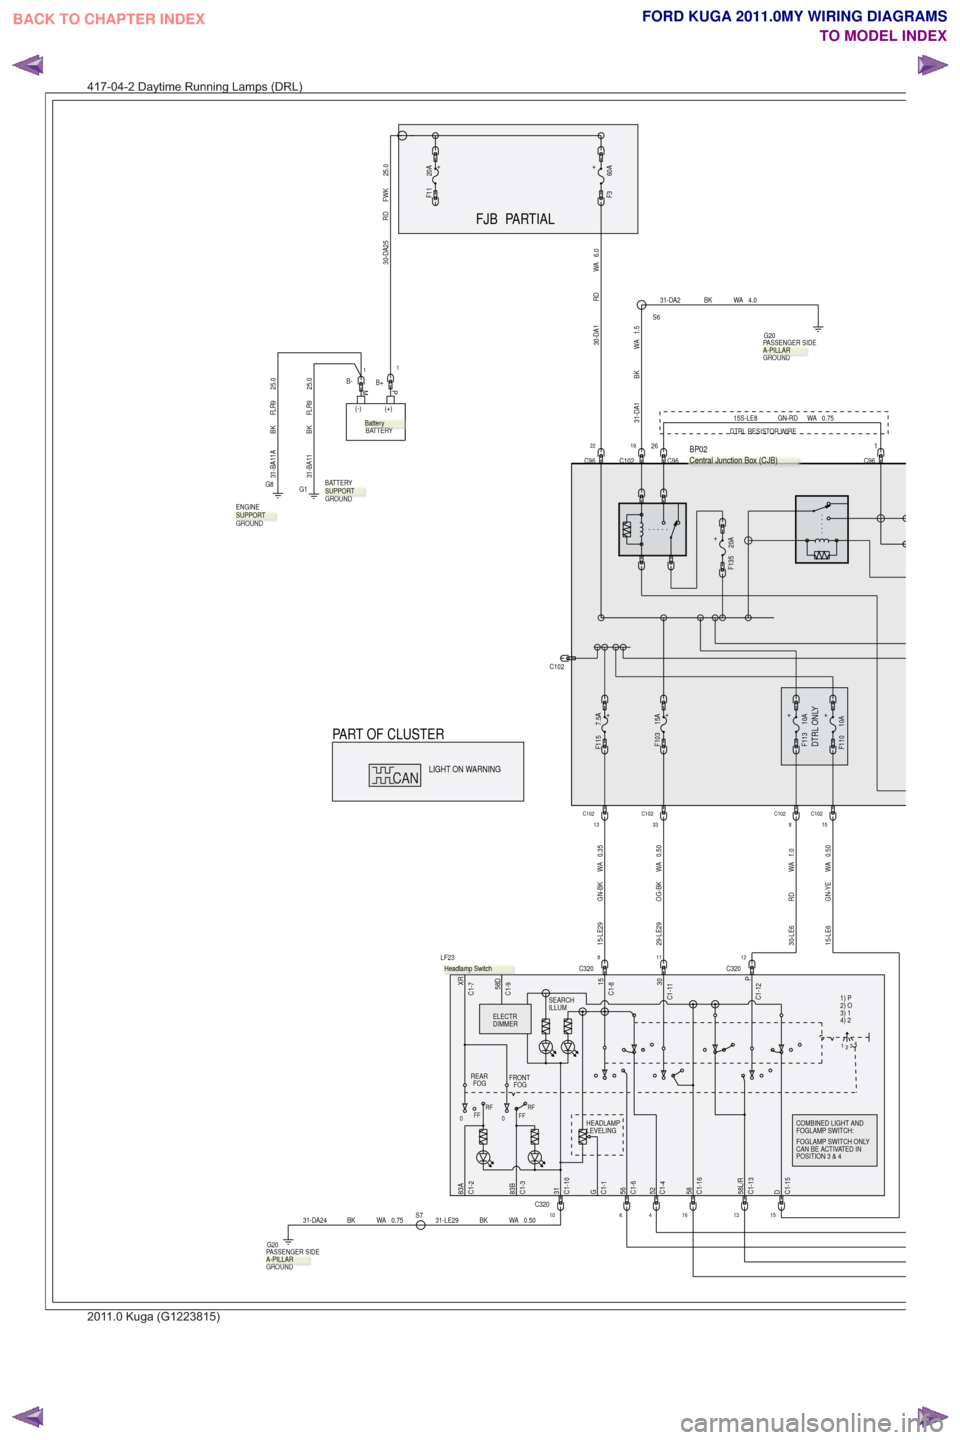 FORD KUGA 2011 1.G Wiring Diagram Workshop Manual DTRL ONLYPART OF CLUSTERCAN
CANLIGHT ON WARNING
DTRL RESISTOR WIRE
FJB PARTIAL
30-DA1 RD WA 6.0
13
11
C320101631-LE29 BK WA 0.50
0.50
WA
OG-BK
29-LE29
C102
33
30-DA25 RD FWK 25.0
15-LE29 GN-BK WA 0.35